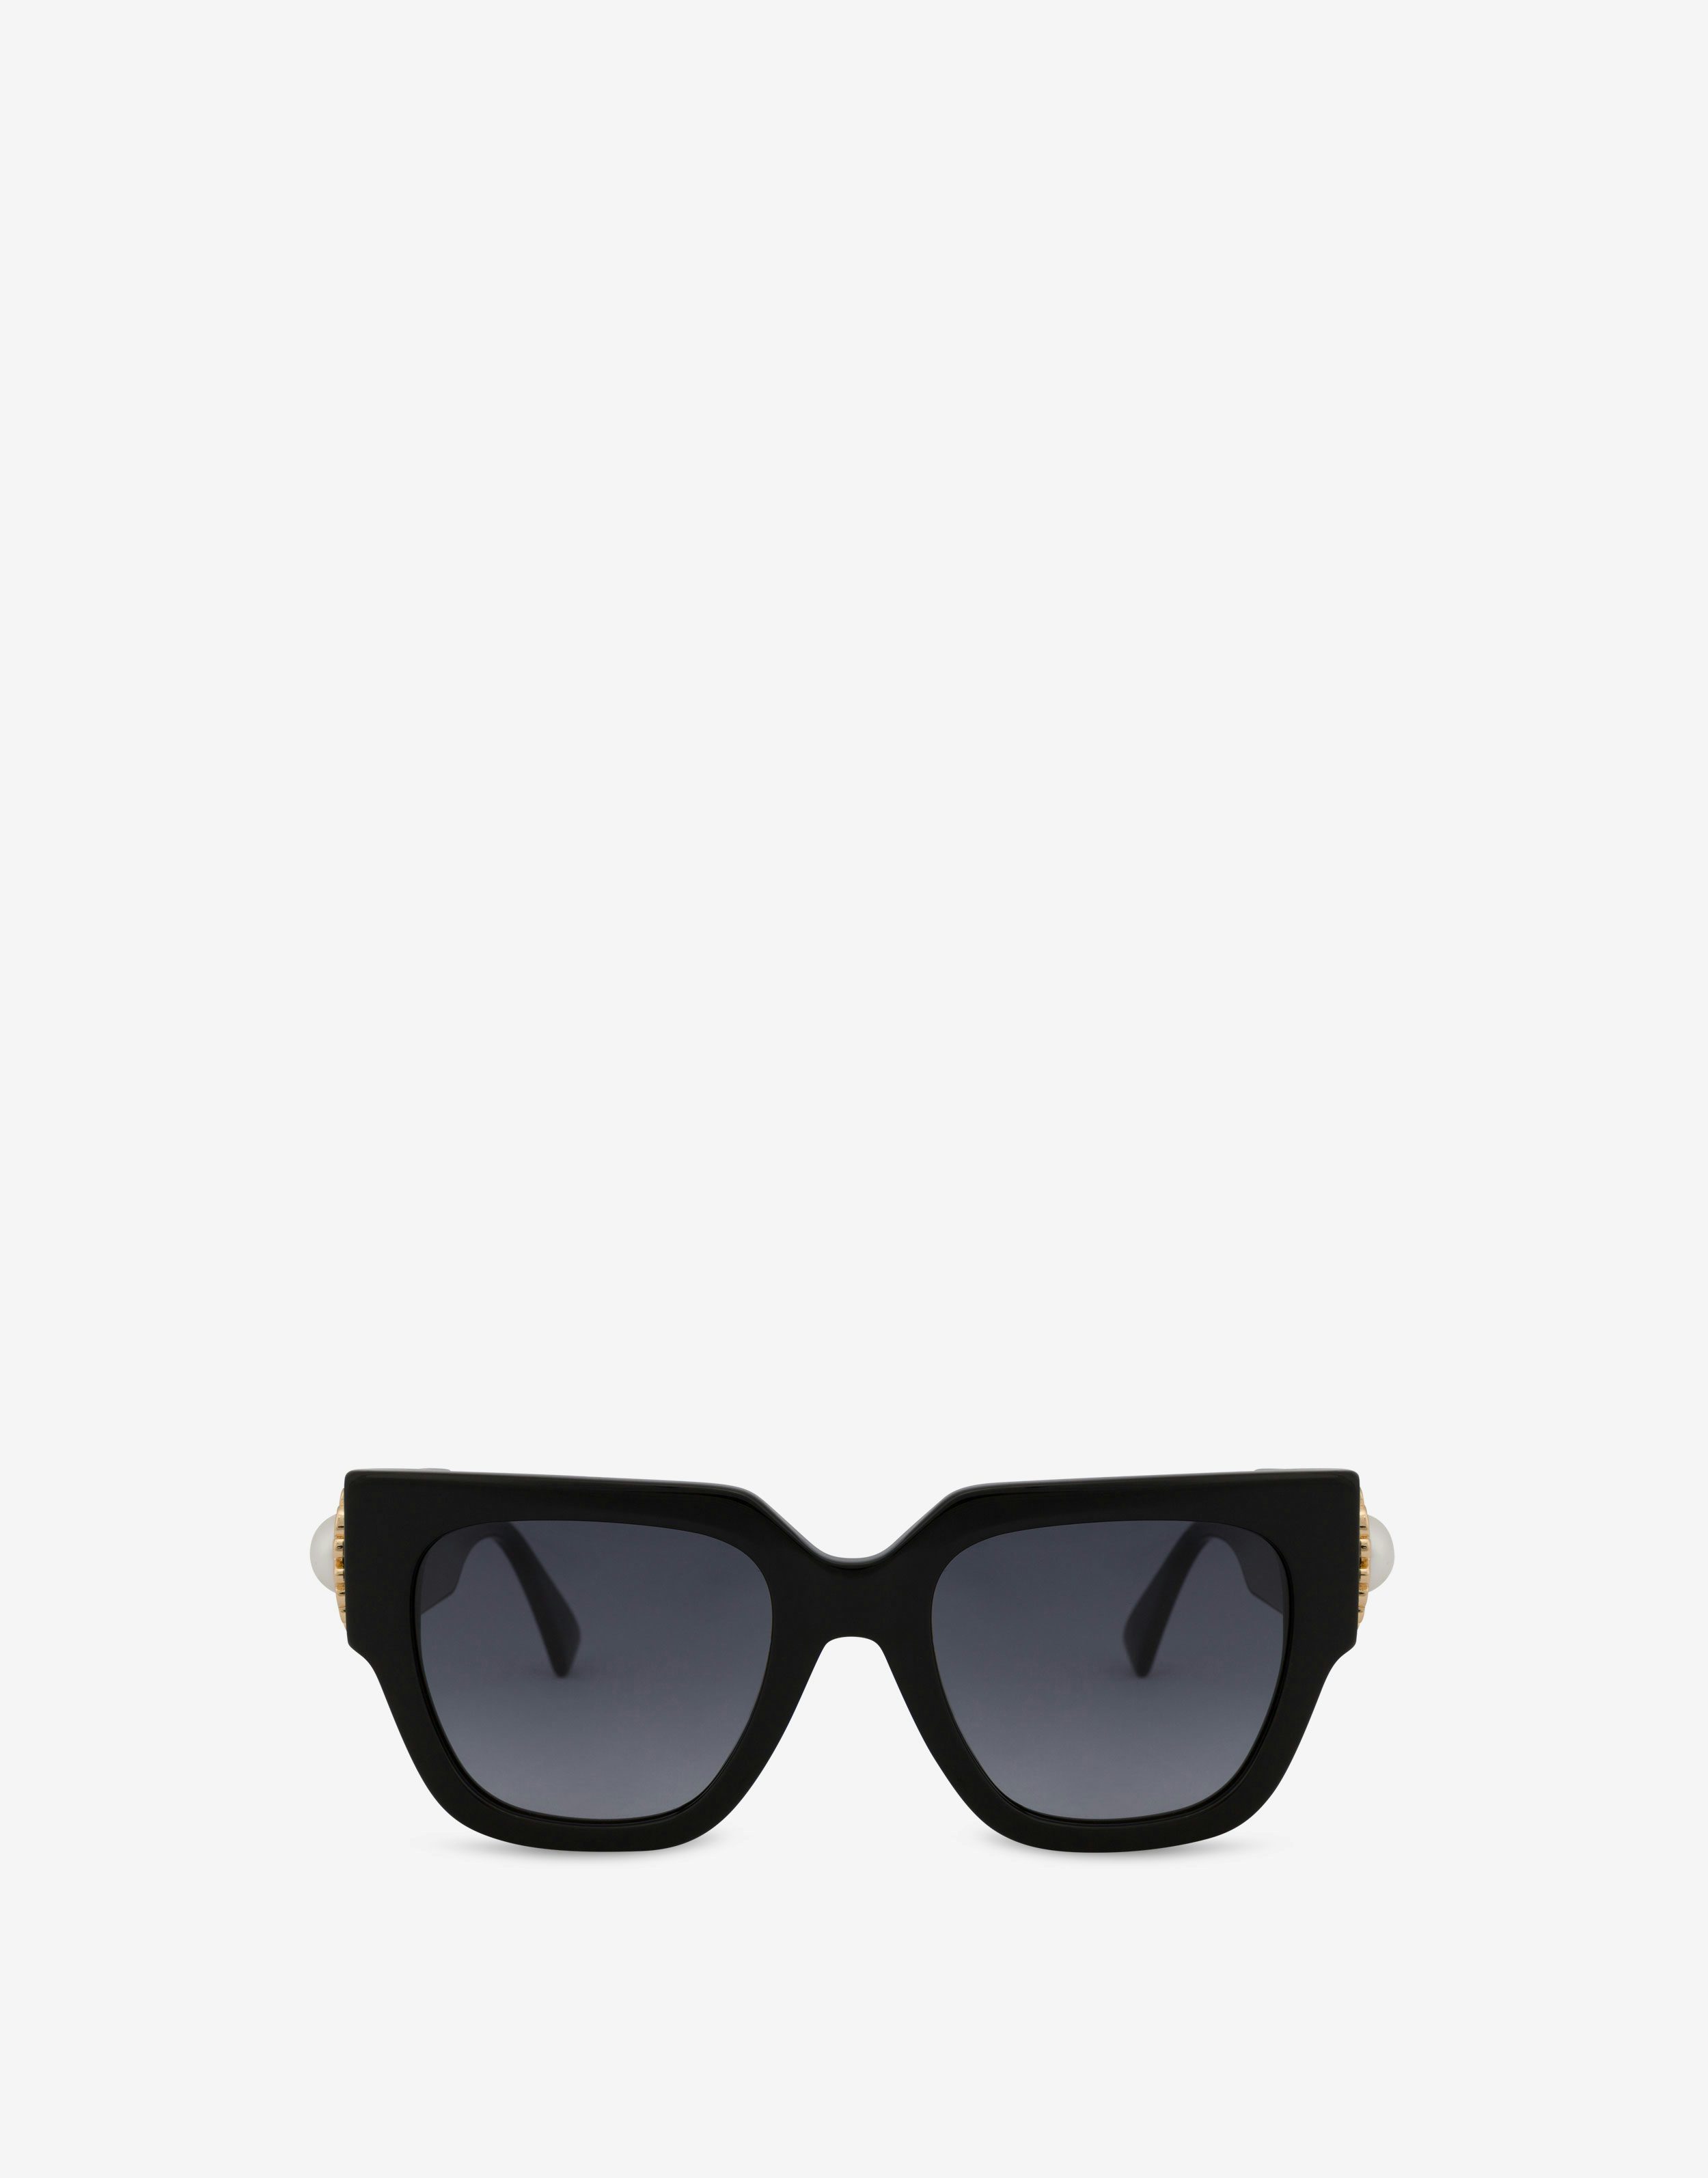 Pearl Trim black sunglasses